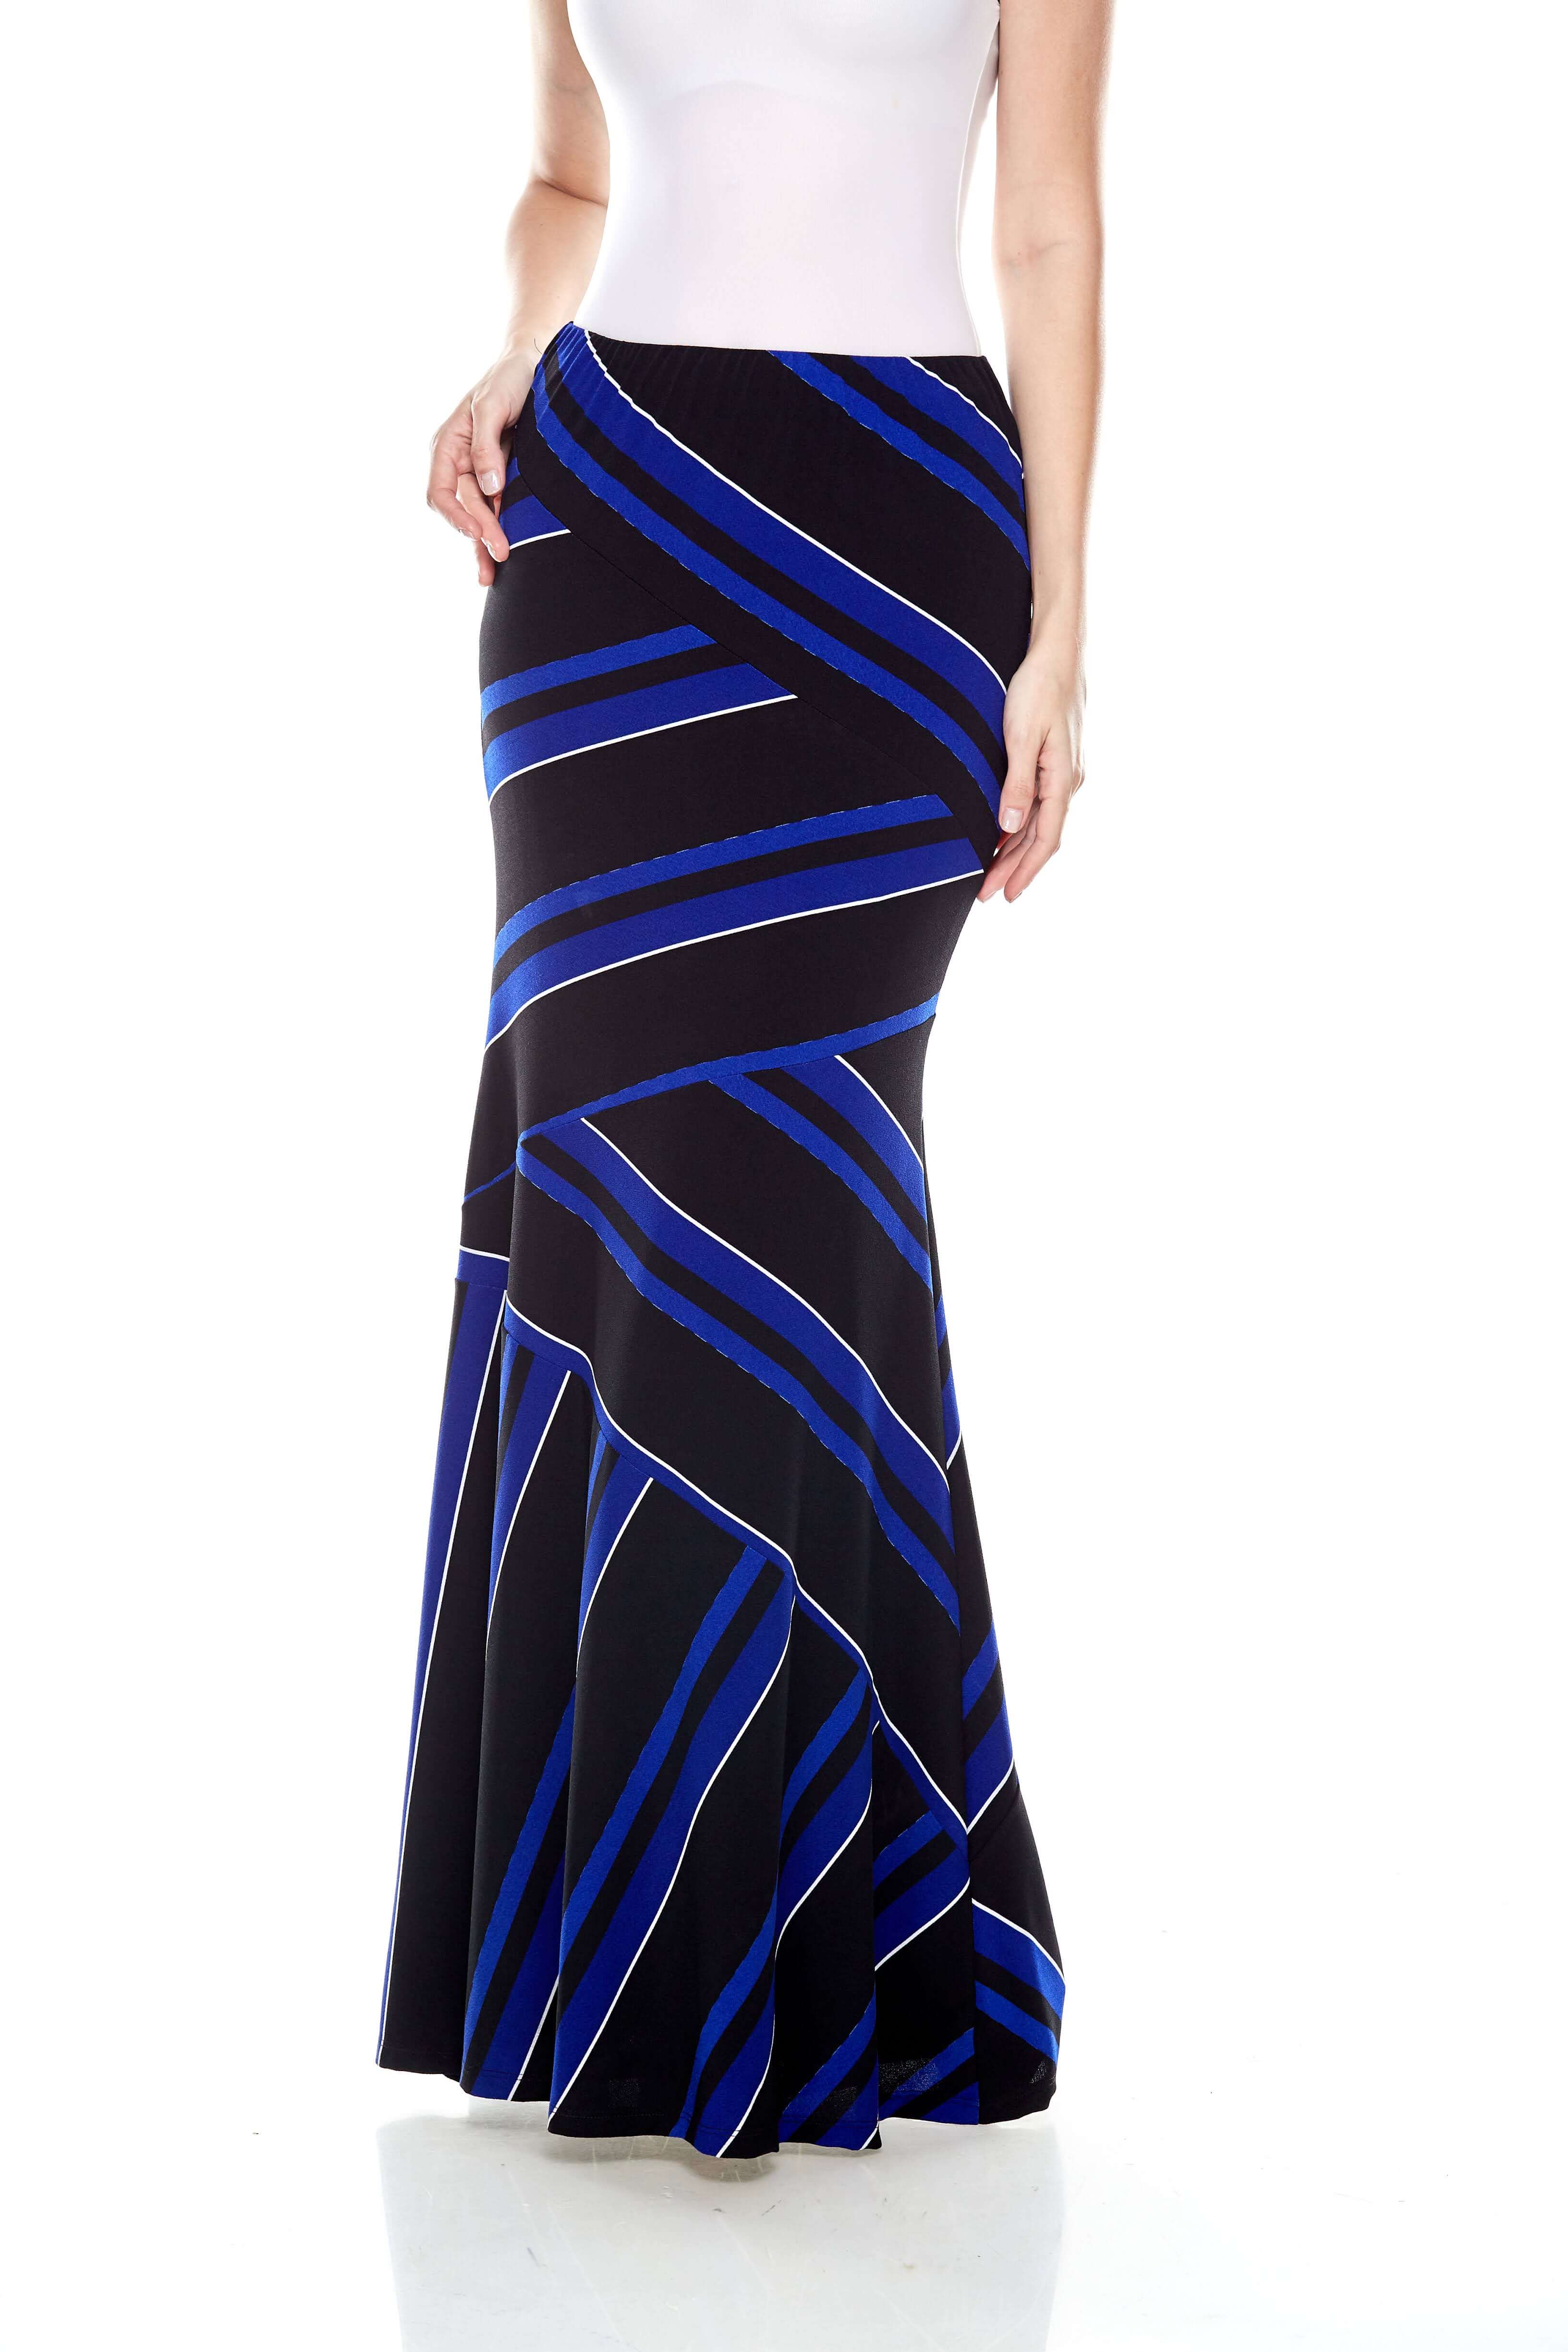 Blue-Black Striped Mermaid Skirt (2)